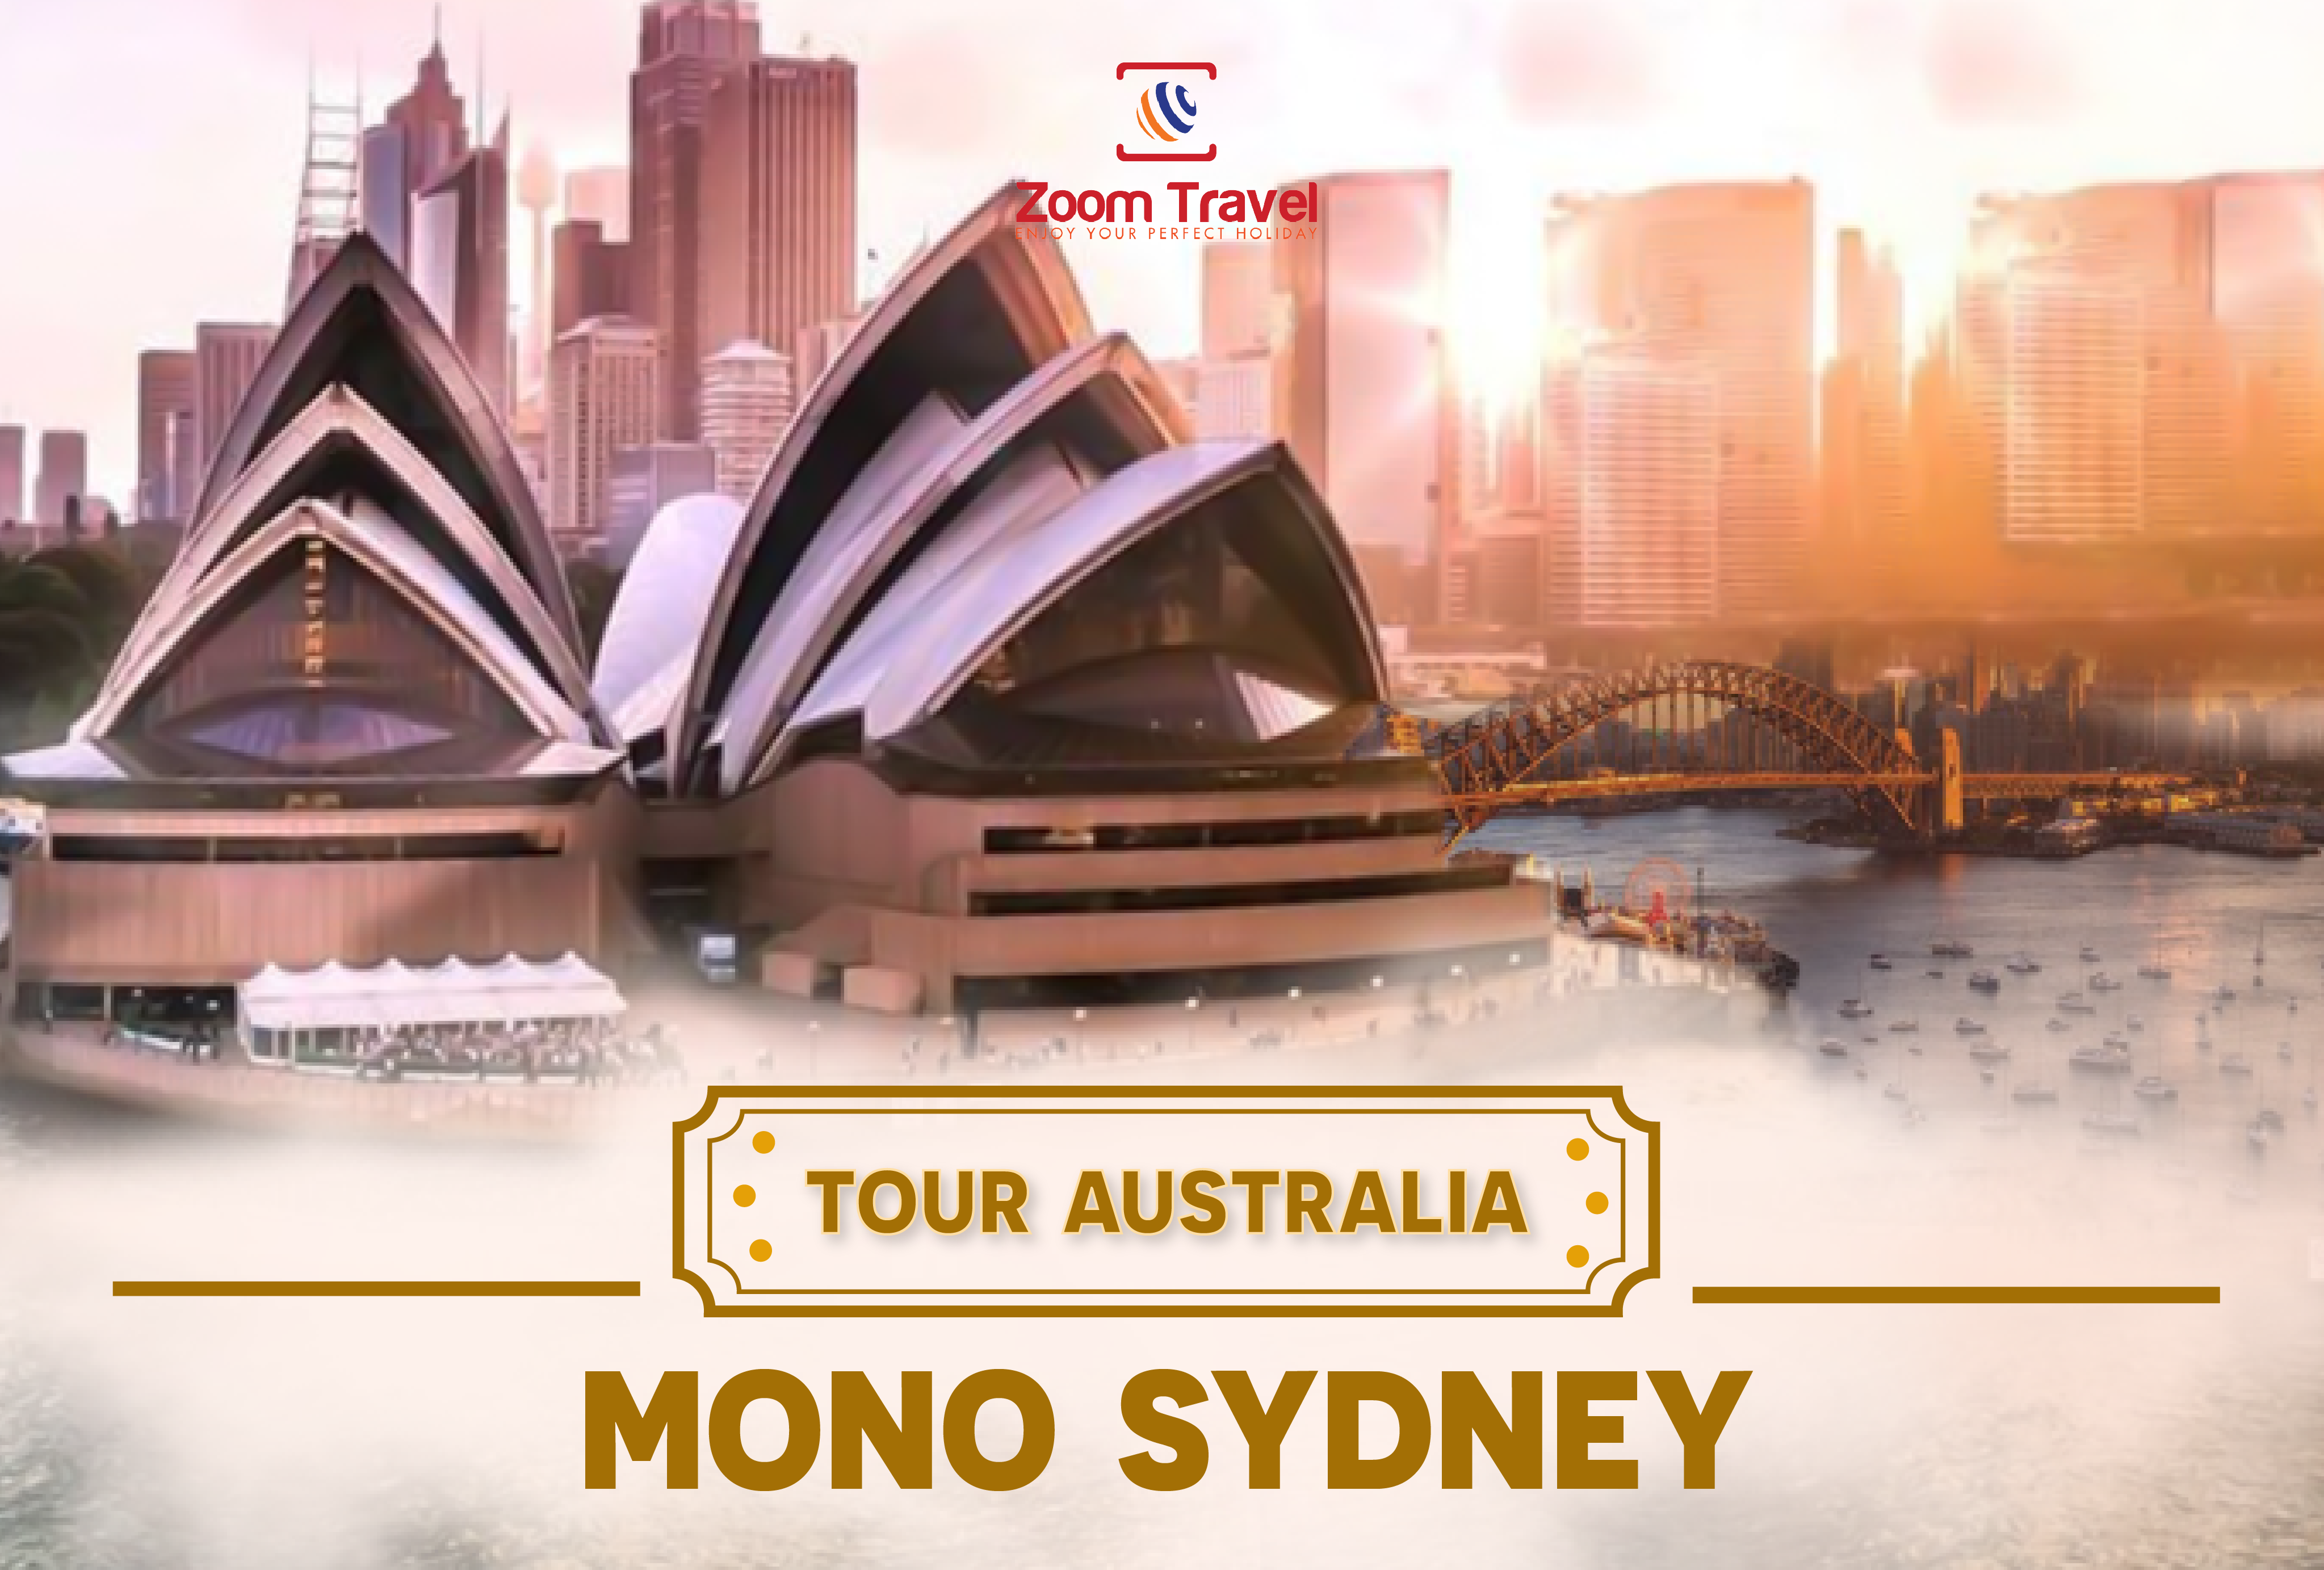 TOUR AUSTRALIA MONO SYDNEY – FREE DAY 5 NGÀY 4 ĐÊM